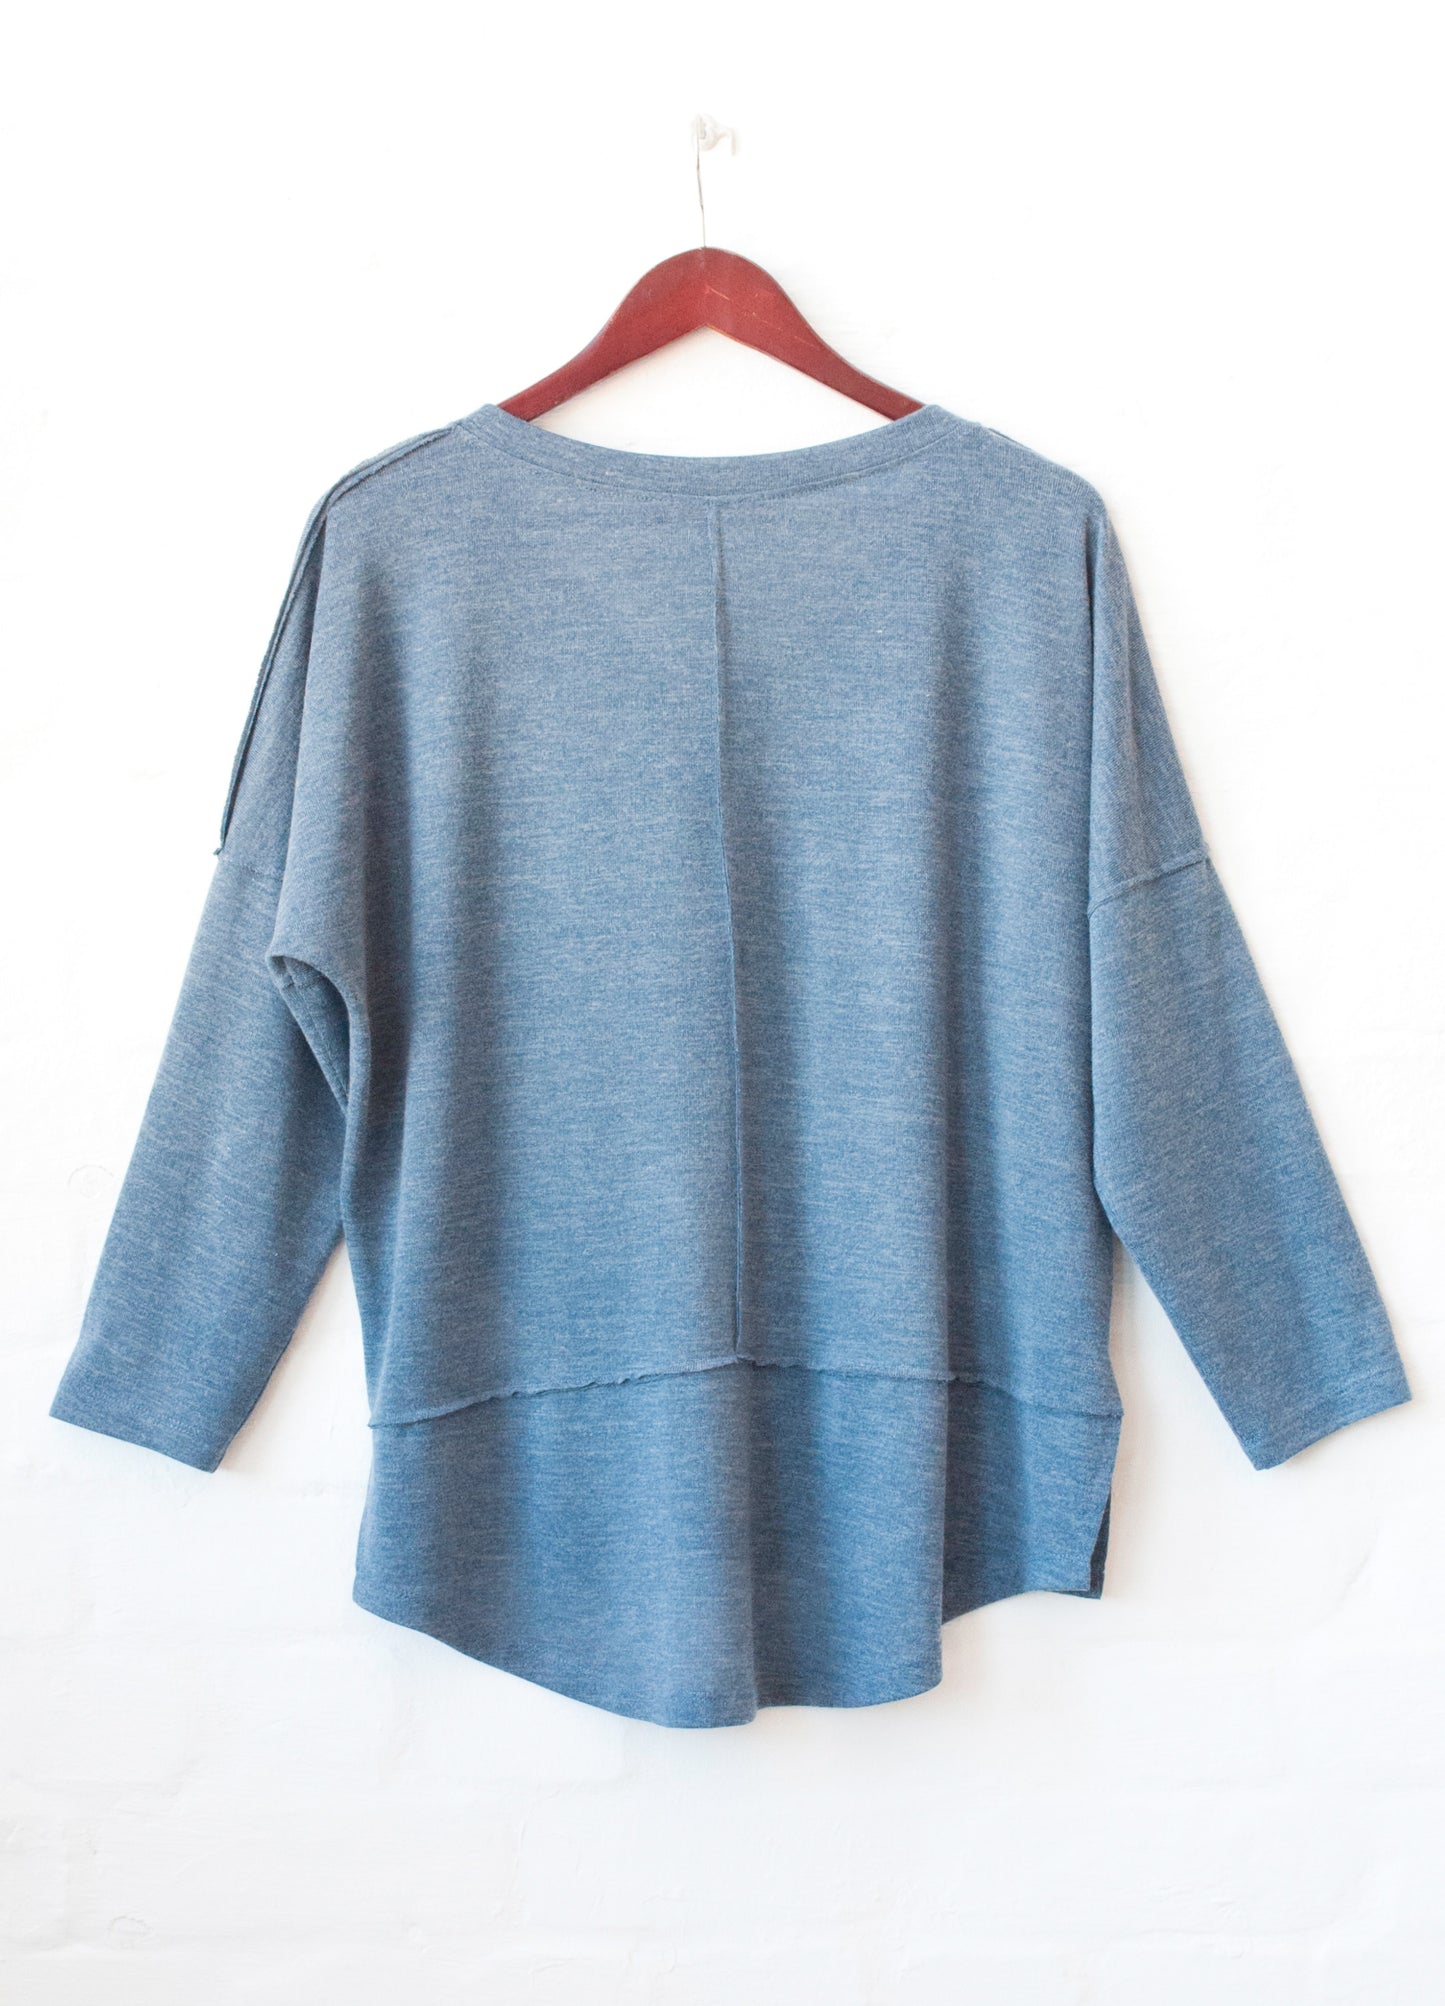 Mia Box Pullover in Indigo melange cut & sew knit size 42